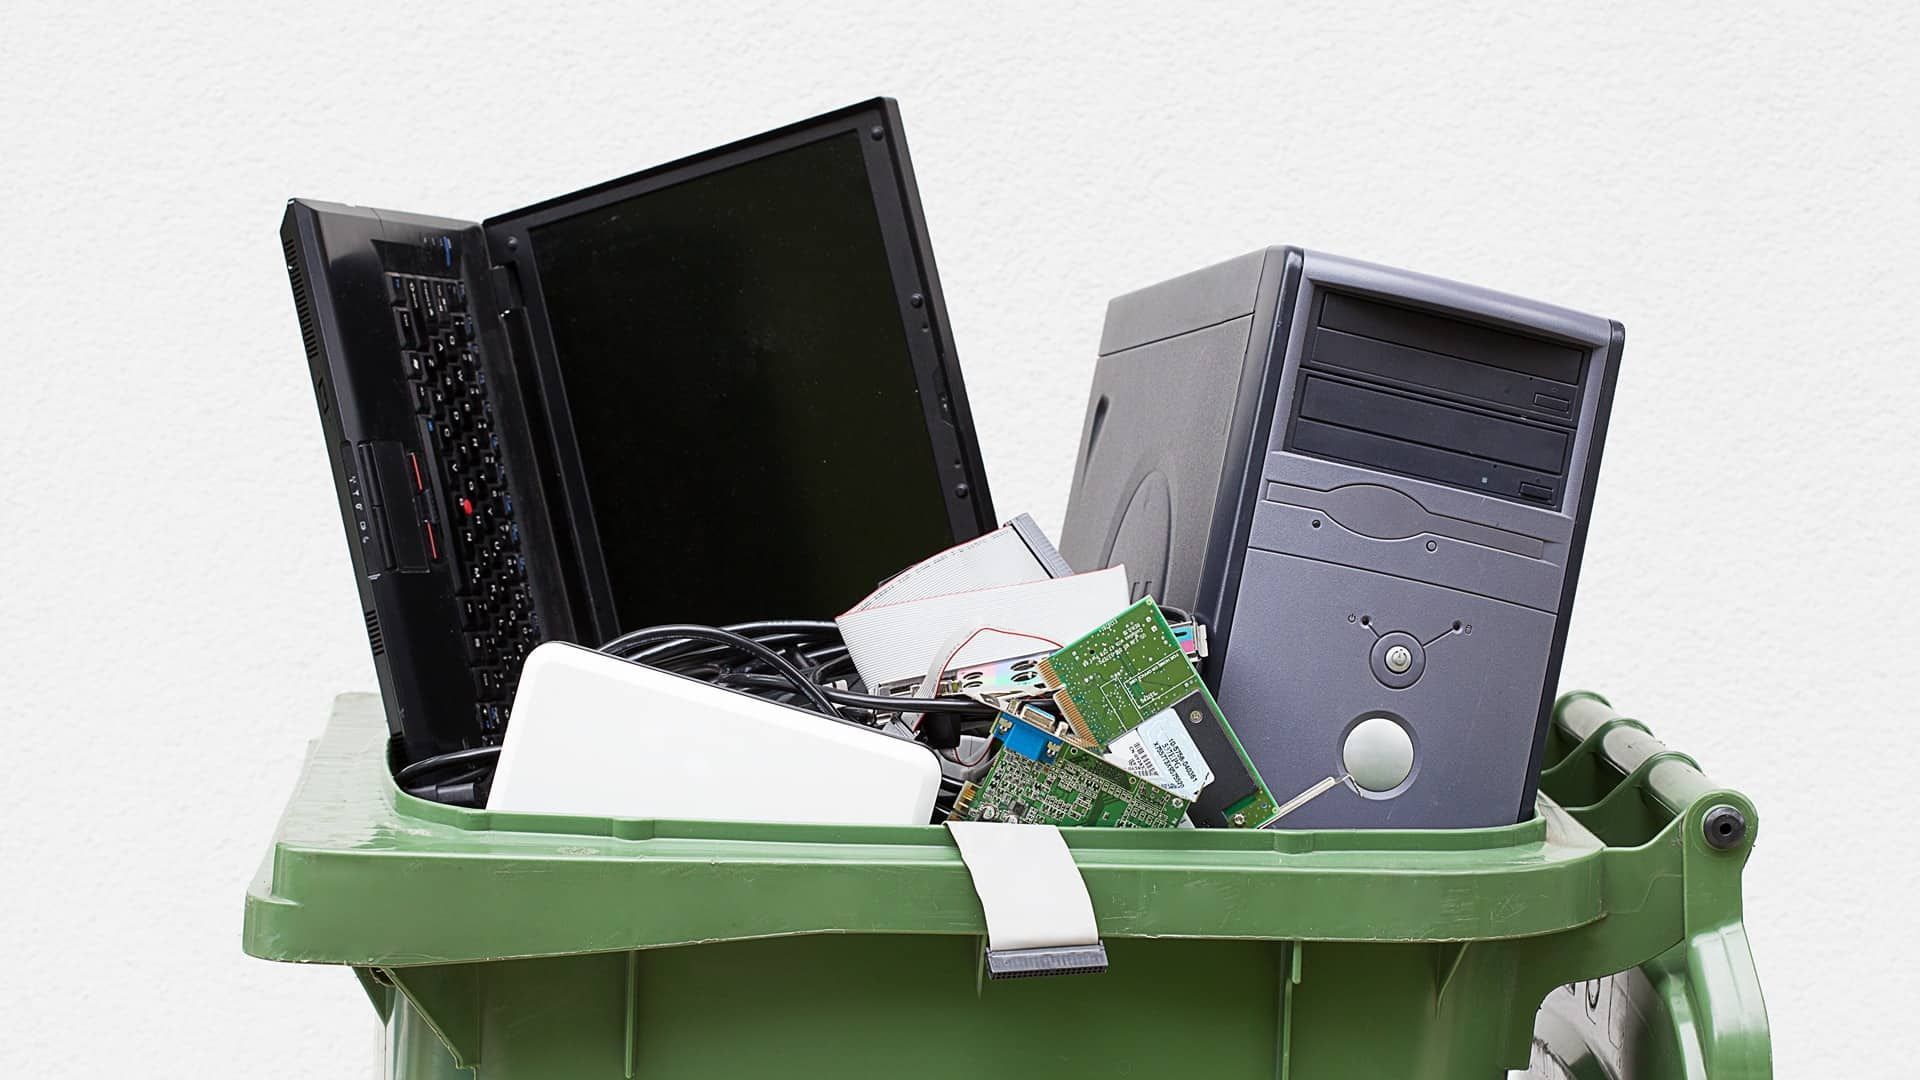 Lexington Computer Recycling safely disposing of electronic equipment near Nicholasville, Kentucky (